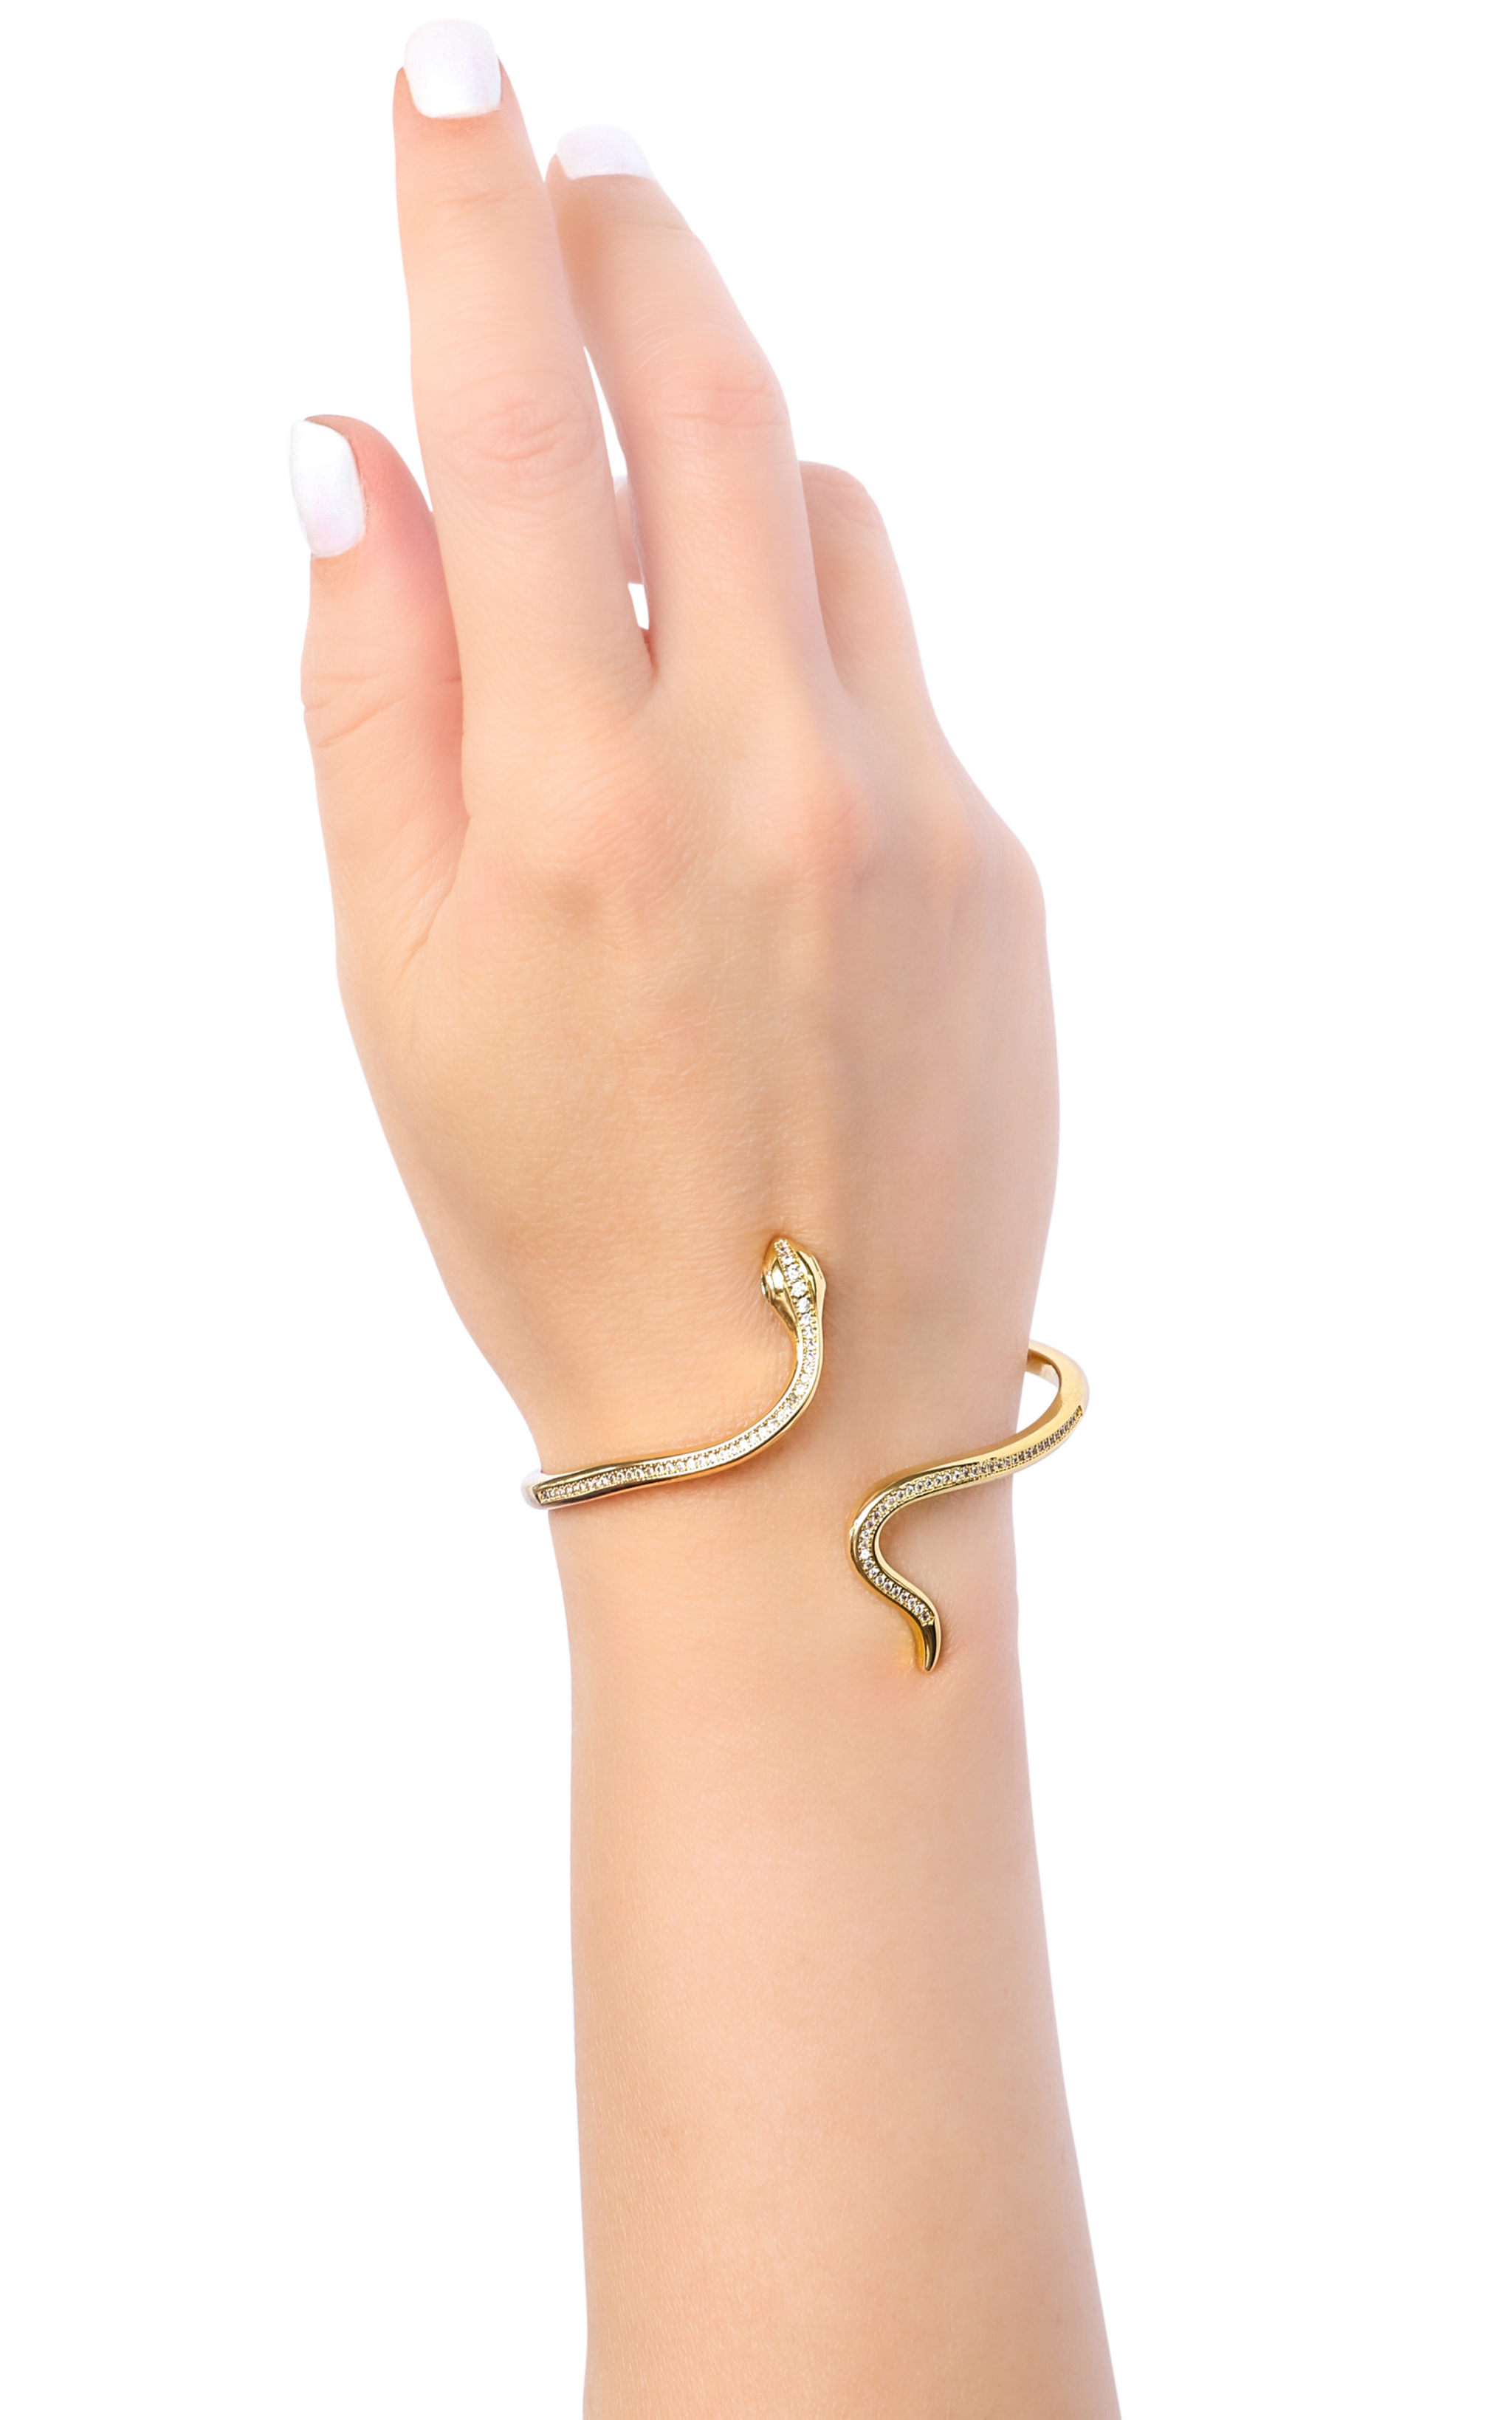 Viper Snake Cuff Bracelet | Fair Anita | Ethical Jewelry |